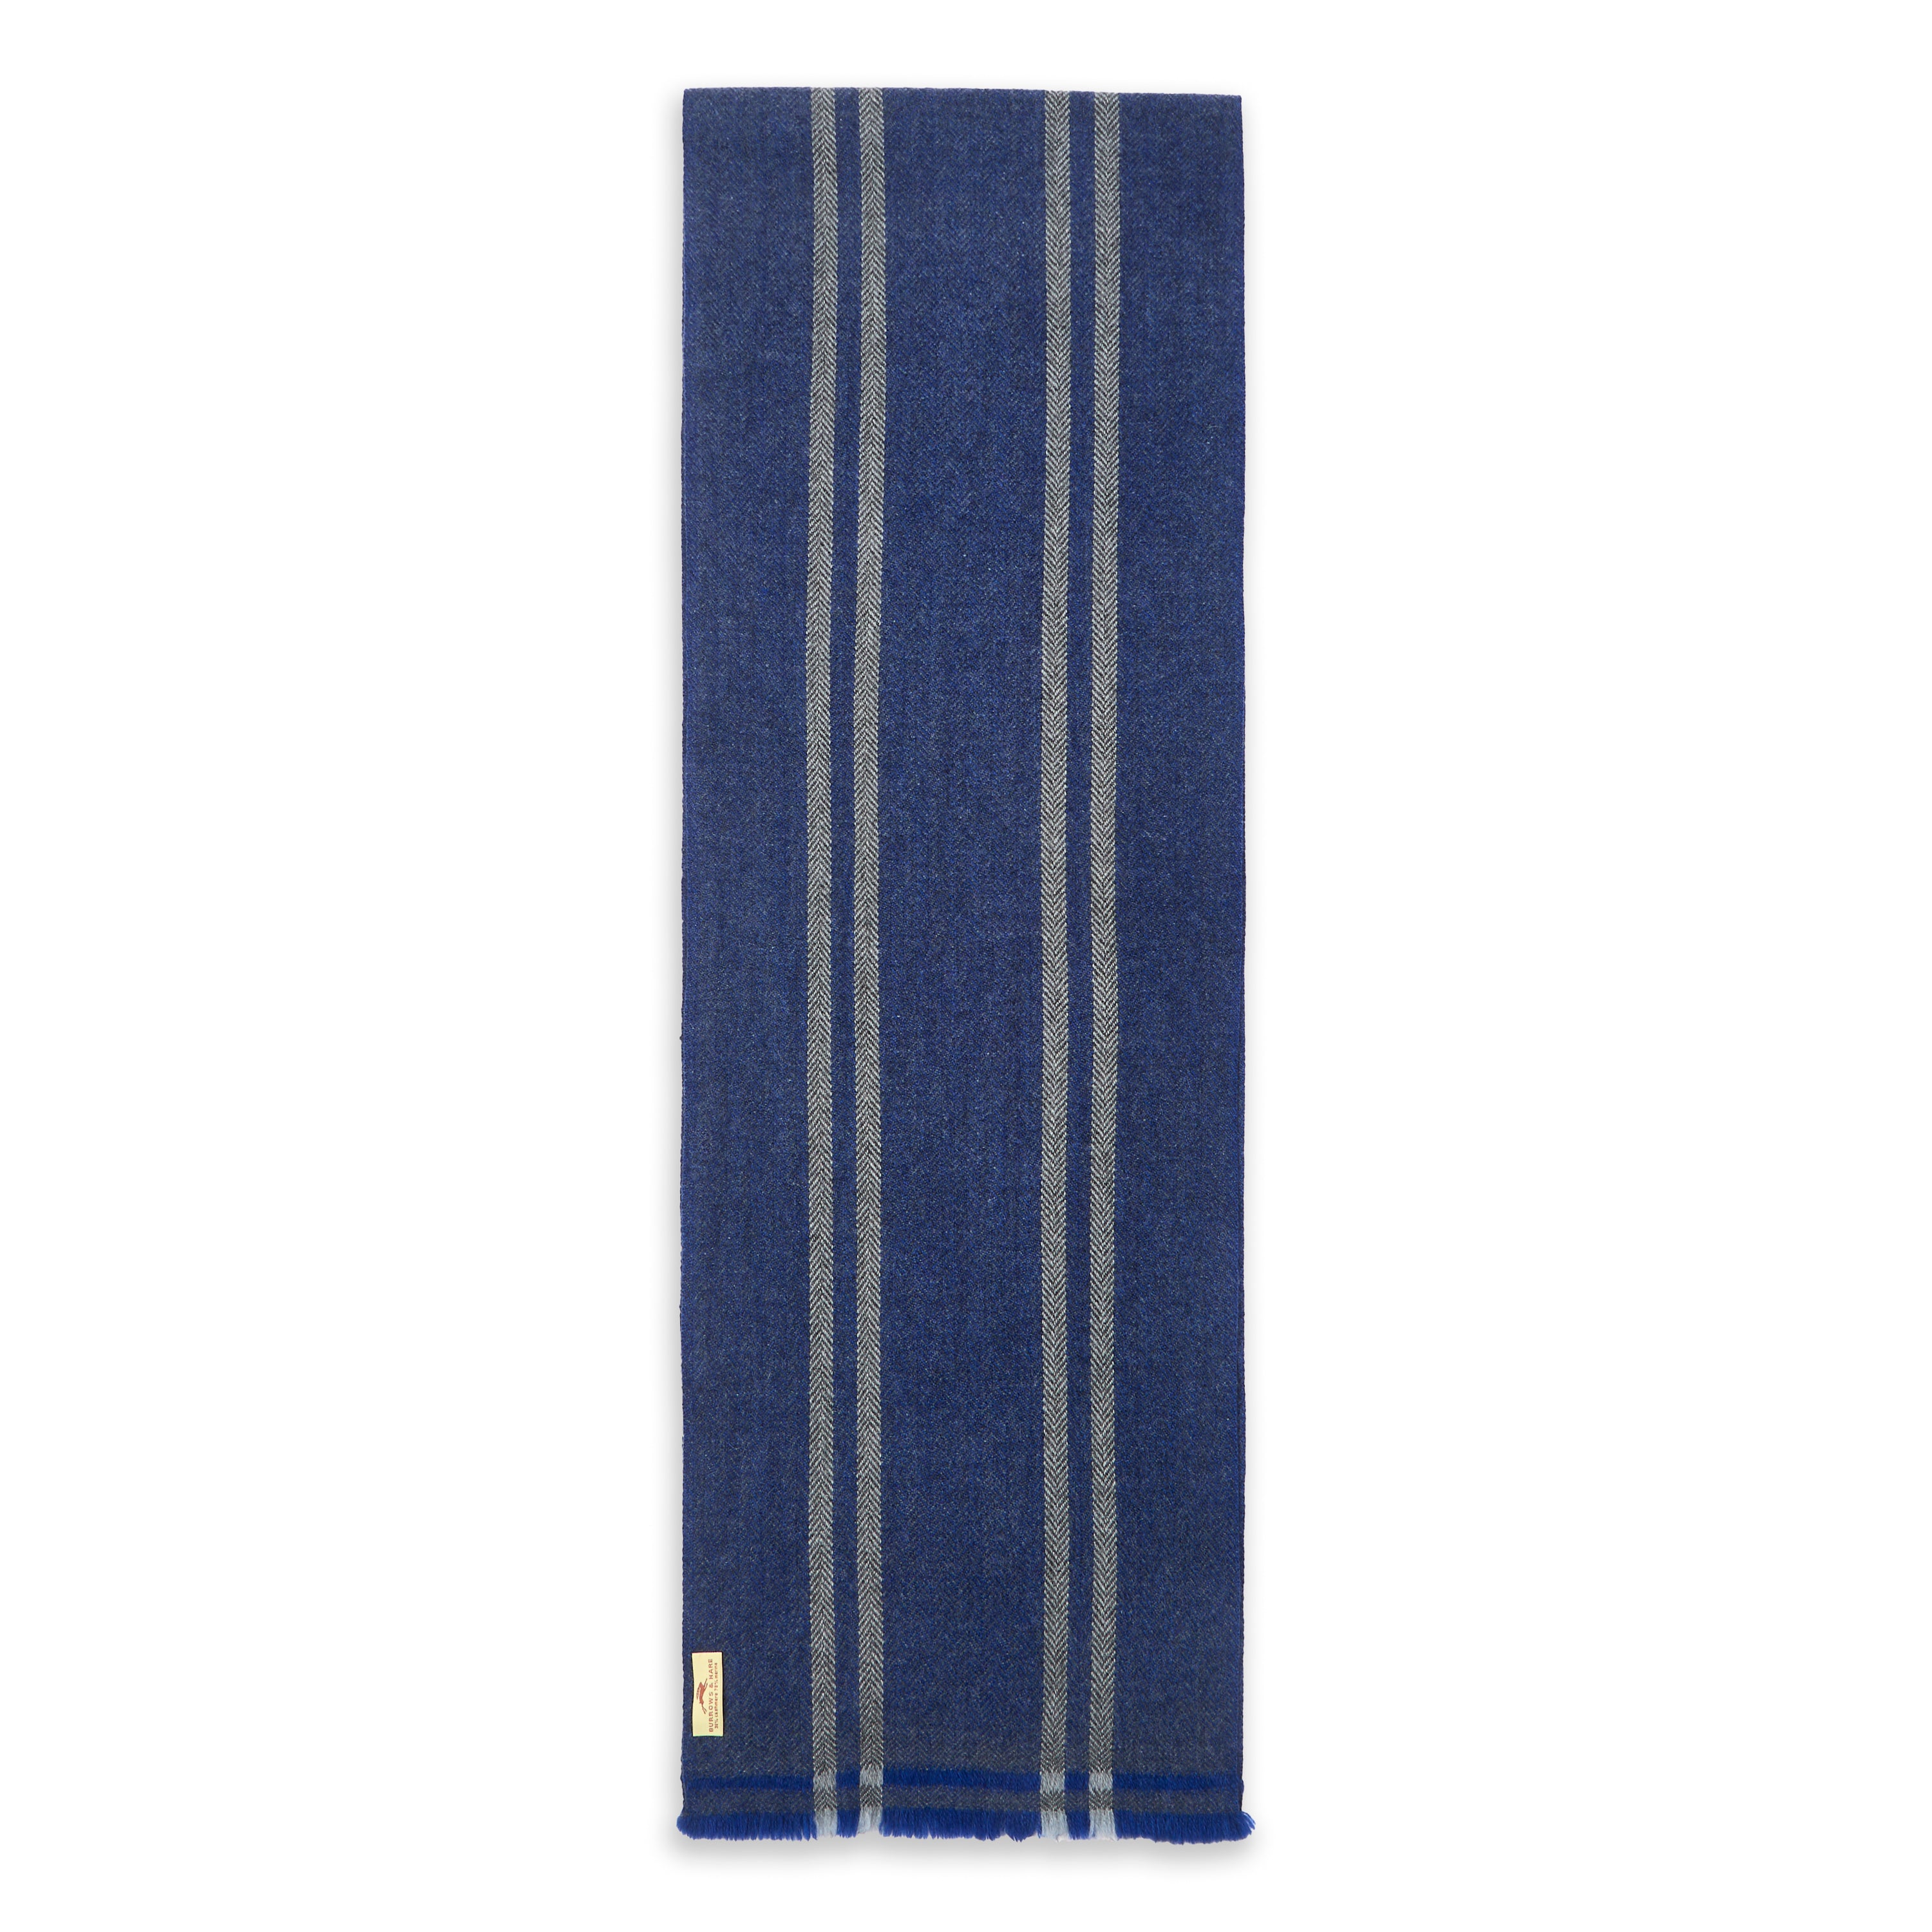 Burrows & Hare  Cashmere & Merino Wool Scarf - Blue & Grey Stripe